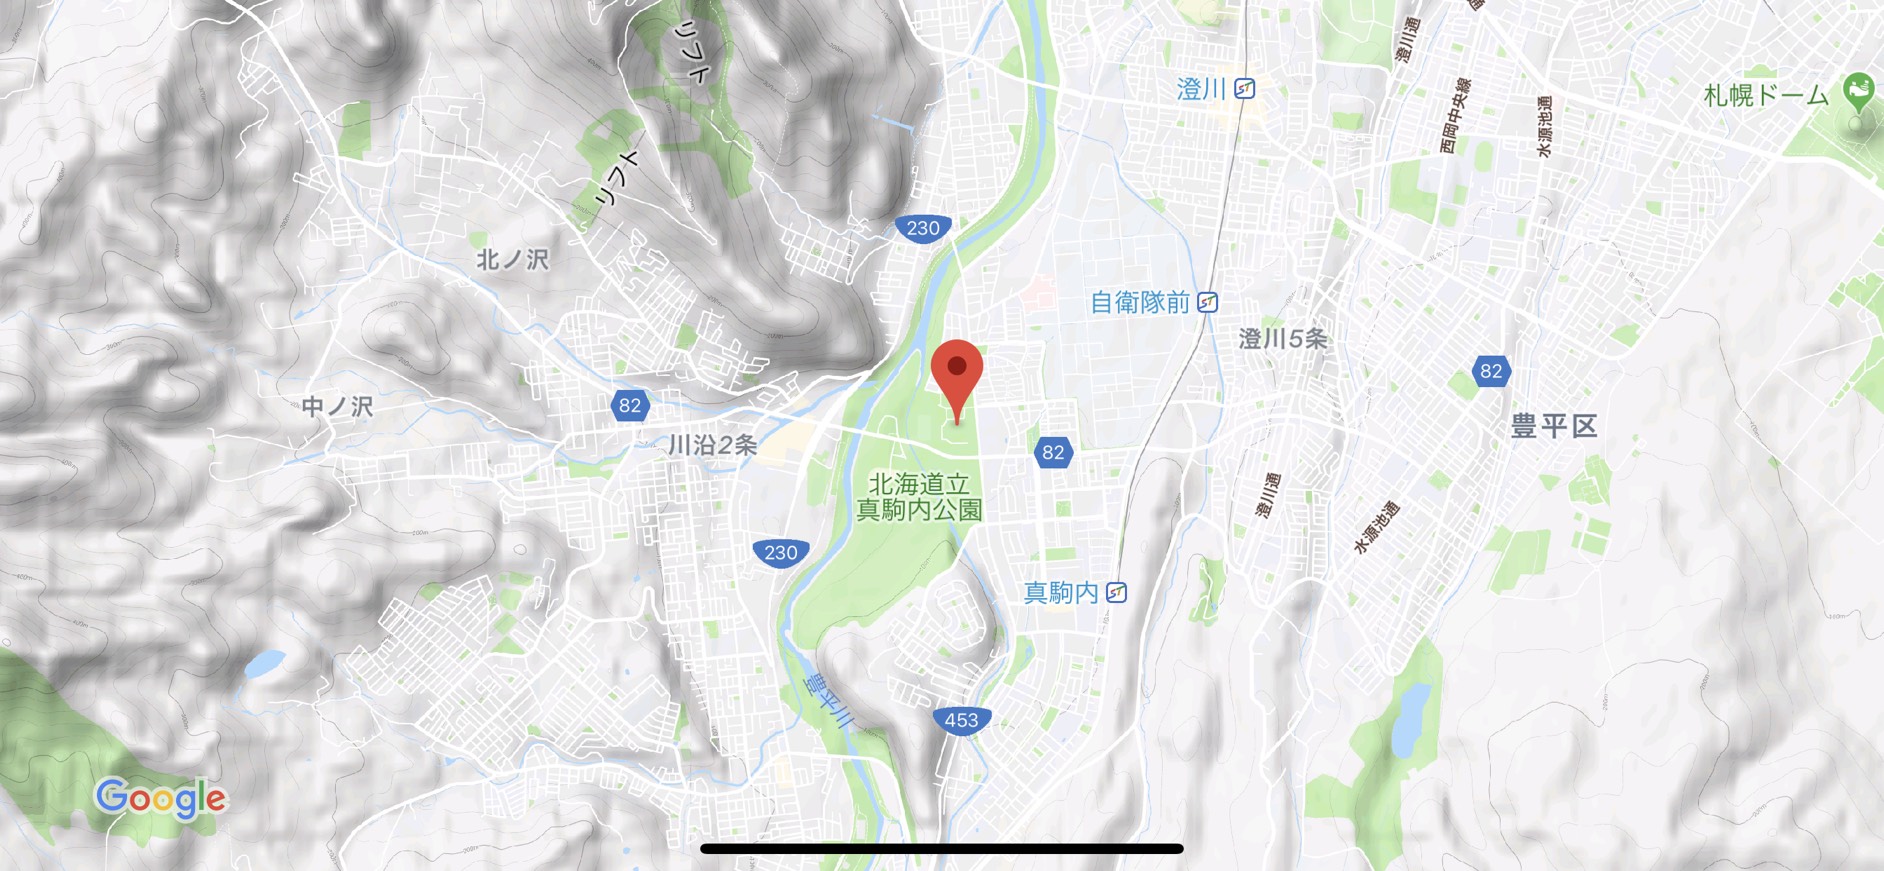 ONE OK ROCK 2019 – 2020 “Eye of the Storm” JAPAN TOUR 真駒内セキスイハイムアイスアリーナ 地図2